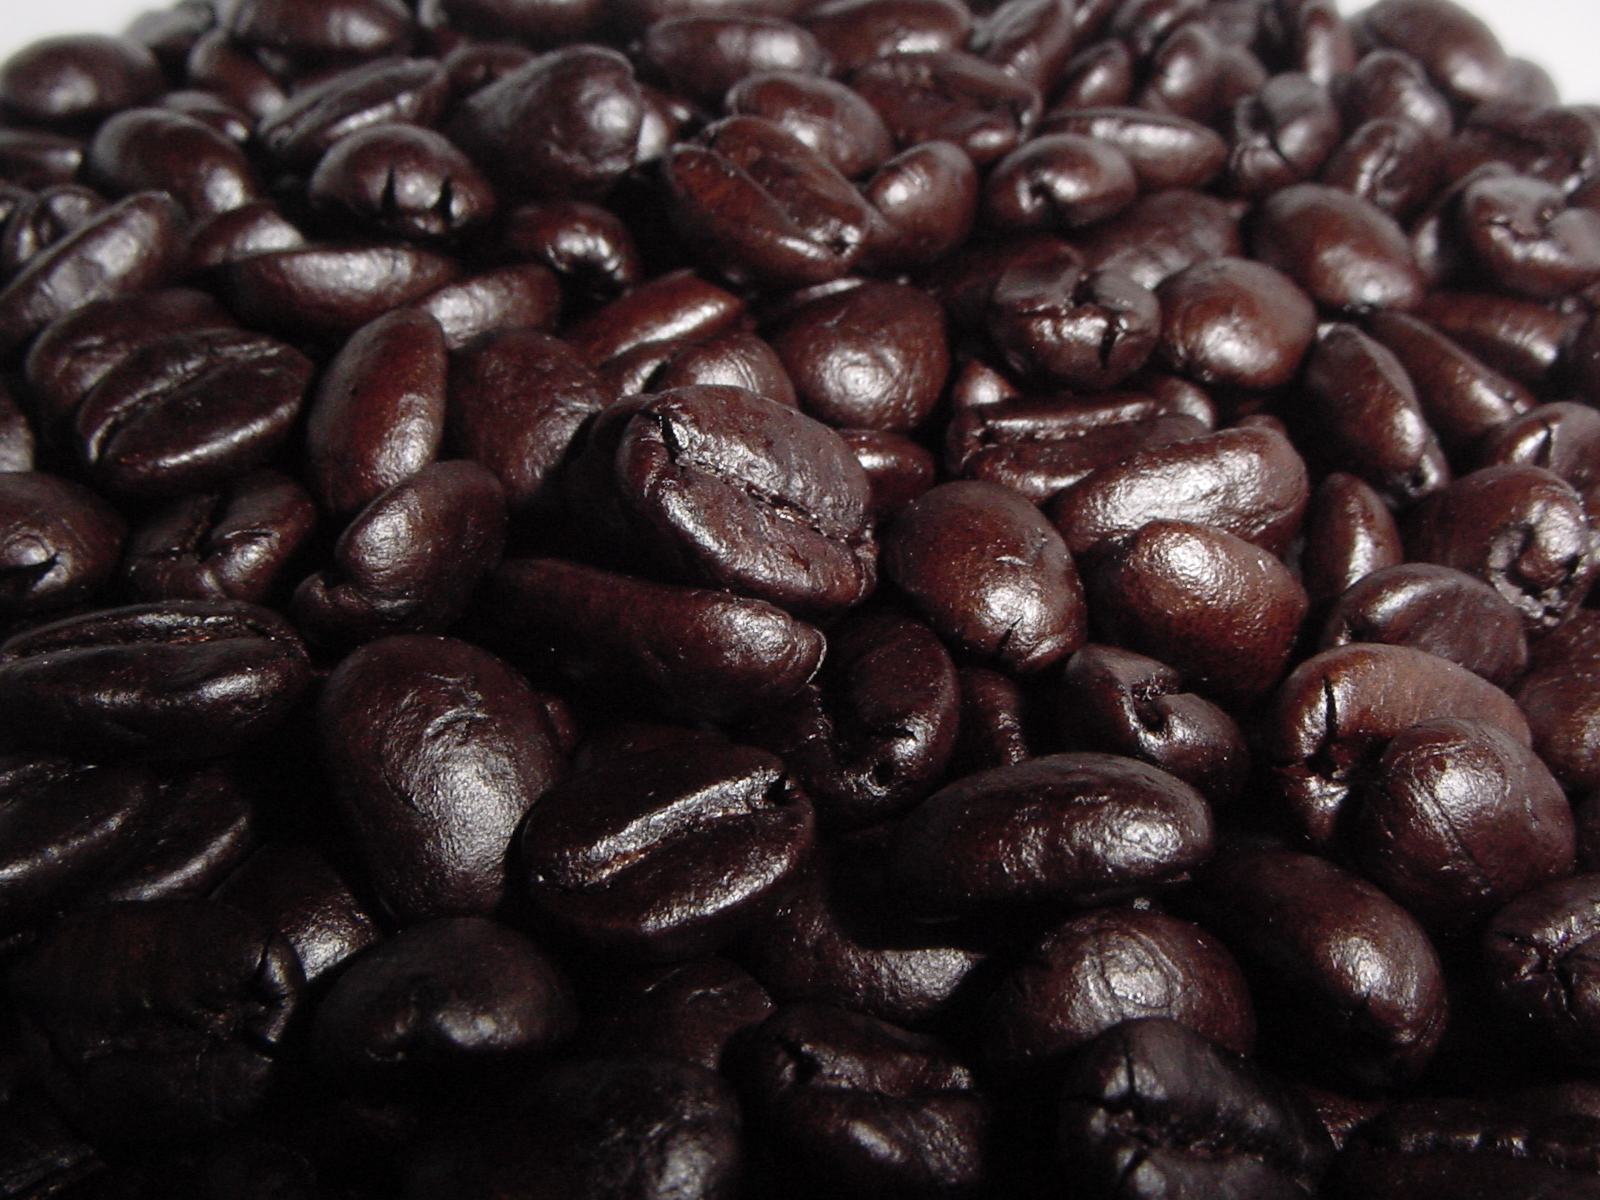 File:Coffee Beans closeup.jpg - Wikimedia Commons